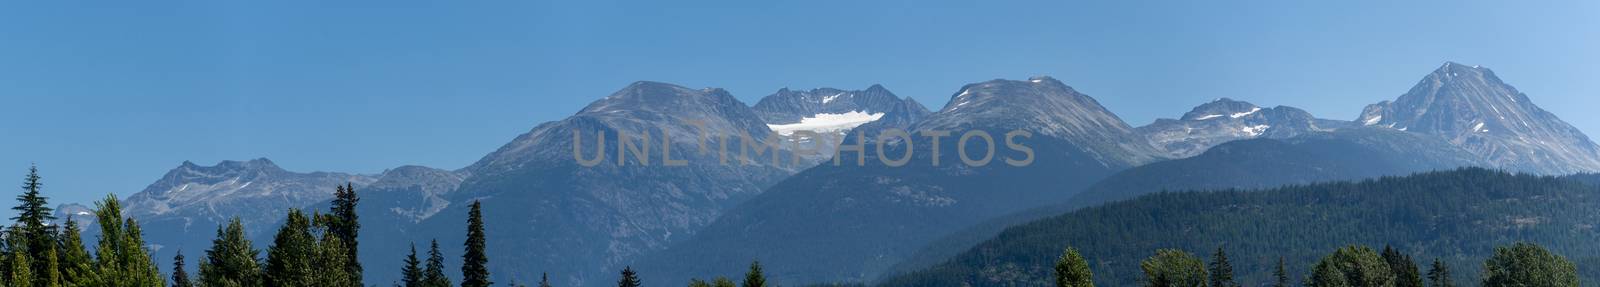 Whistler Mountain Panorama in British Columbia, Canada in the su by kingmaphotos